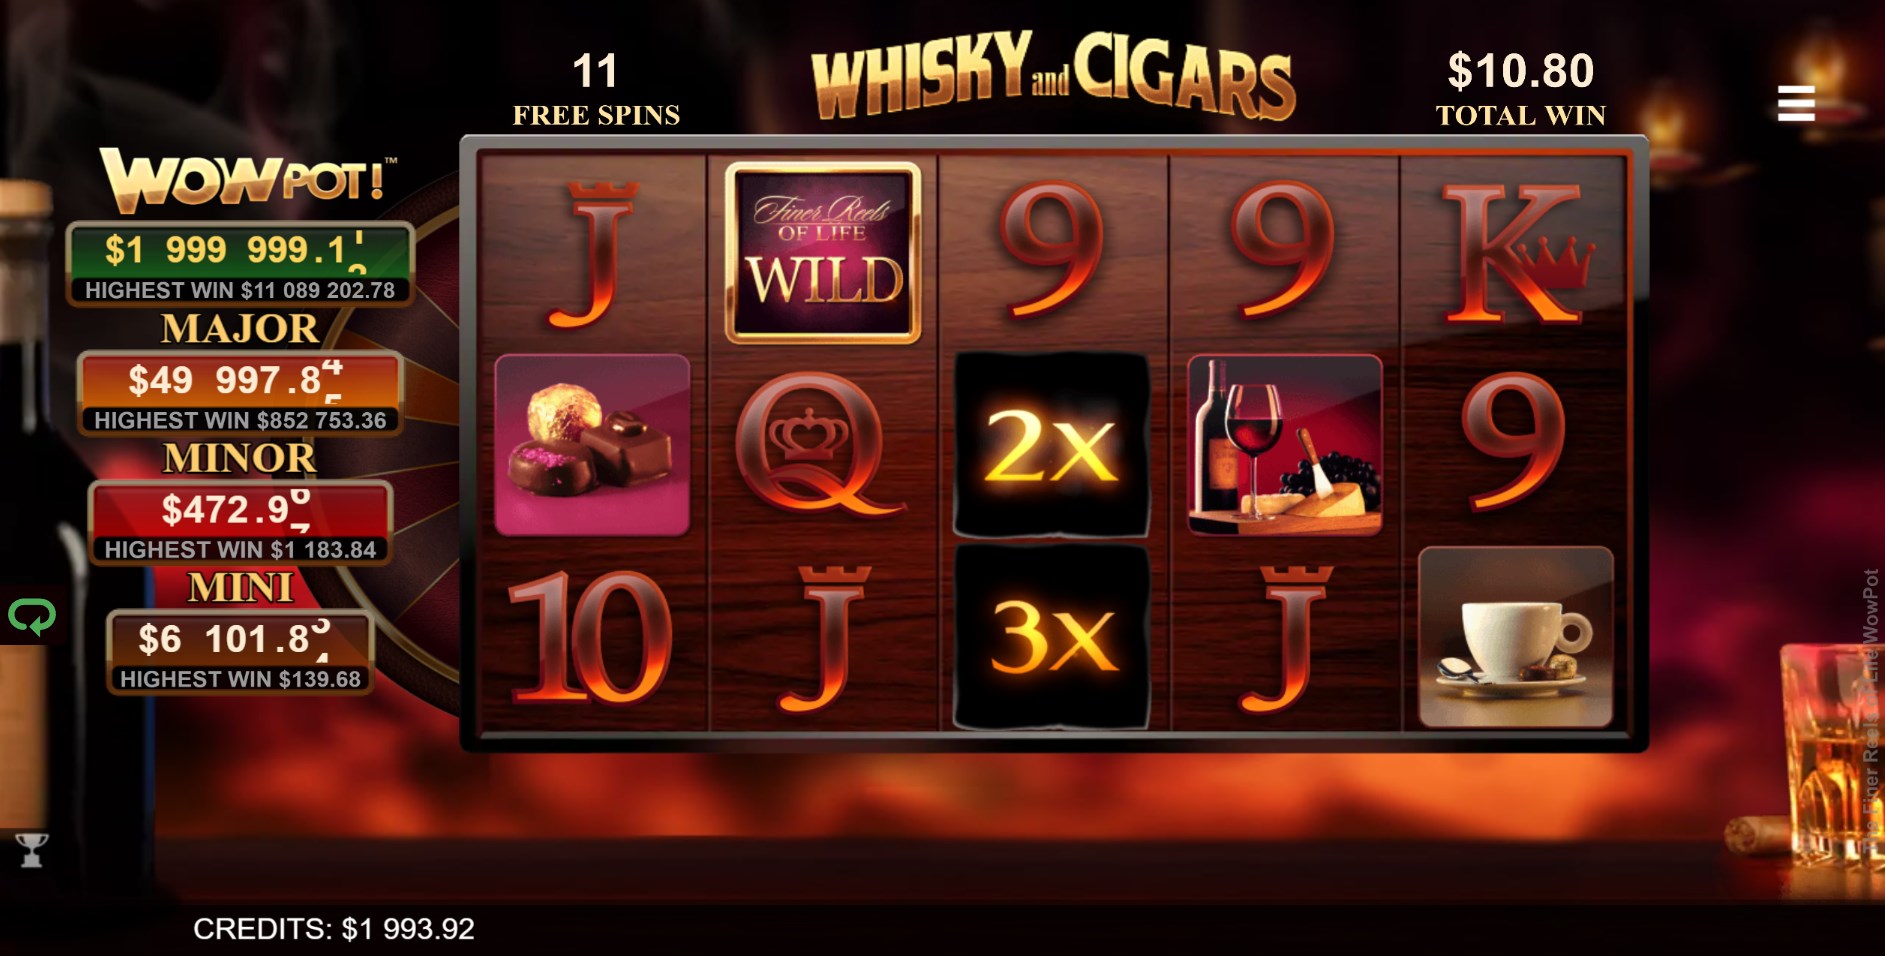 The Finer Reels of Life WOWPot Slot - Whisky and Cigars Bonus